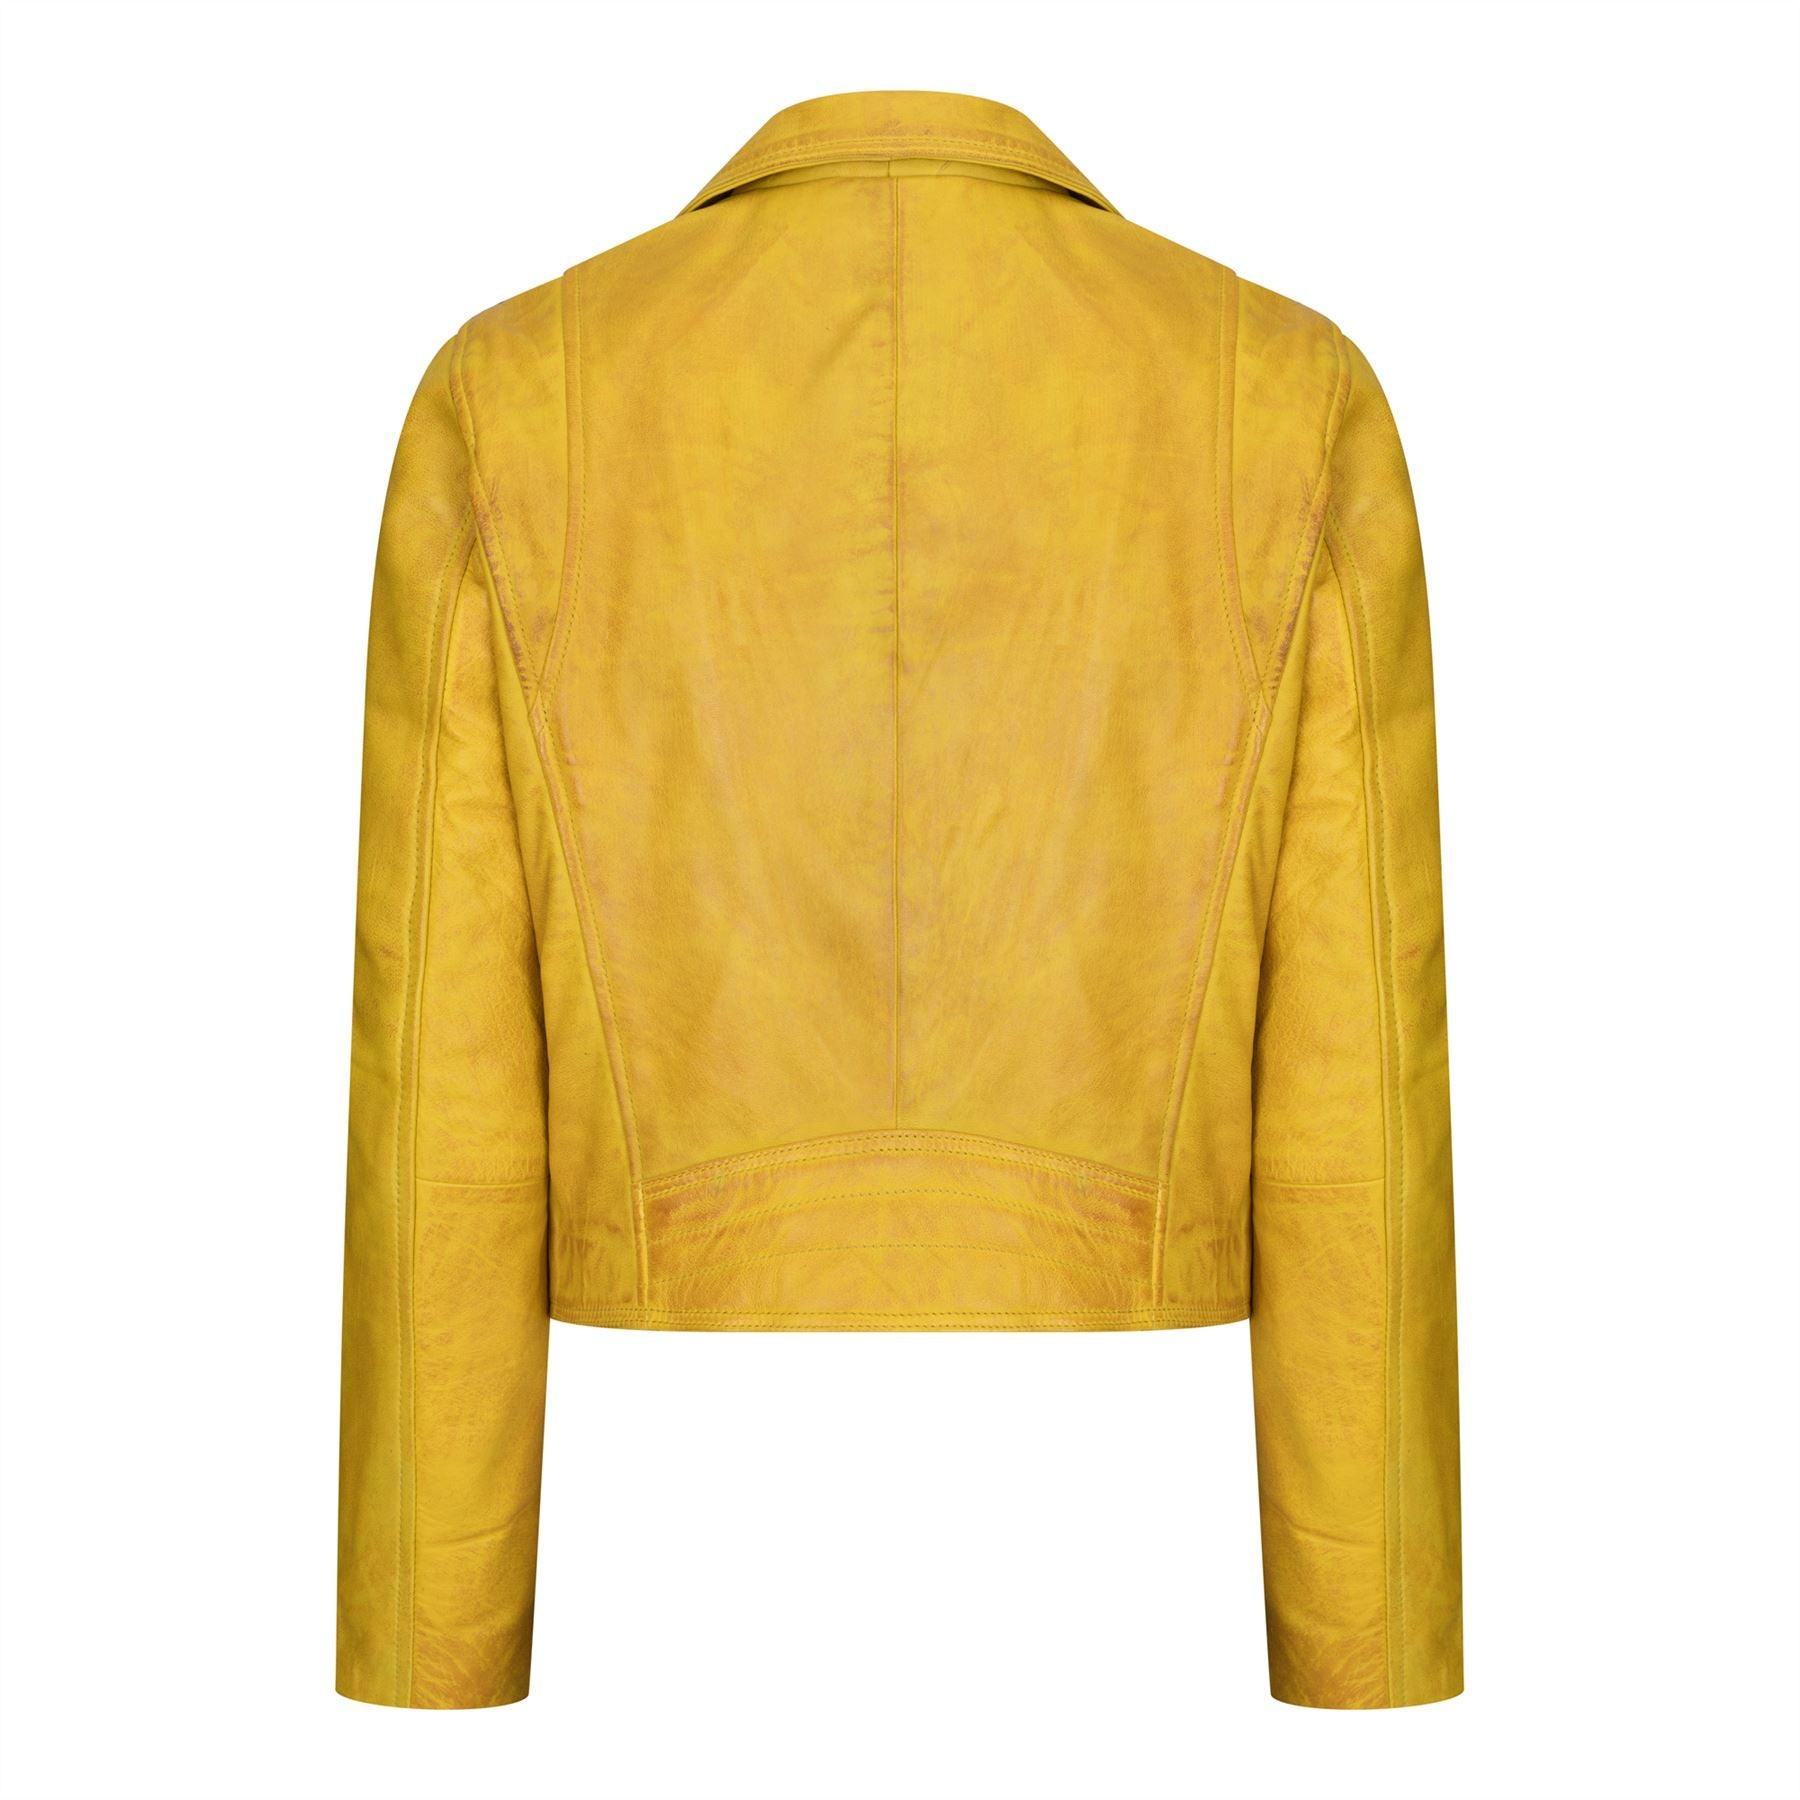 Womens Real Leather Biker Jacket Cross Zip Soft Slim Fit Brando Tan Brown Black Red Yellow - Knighthood Store